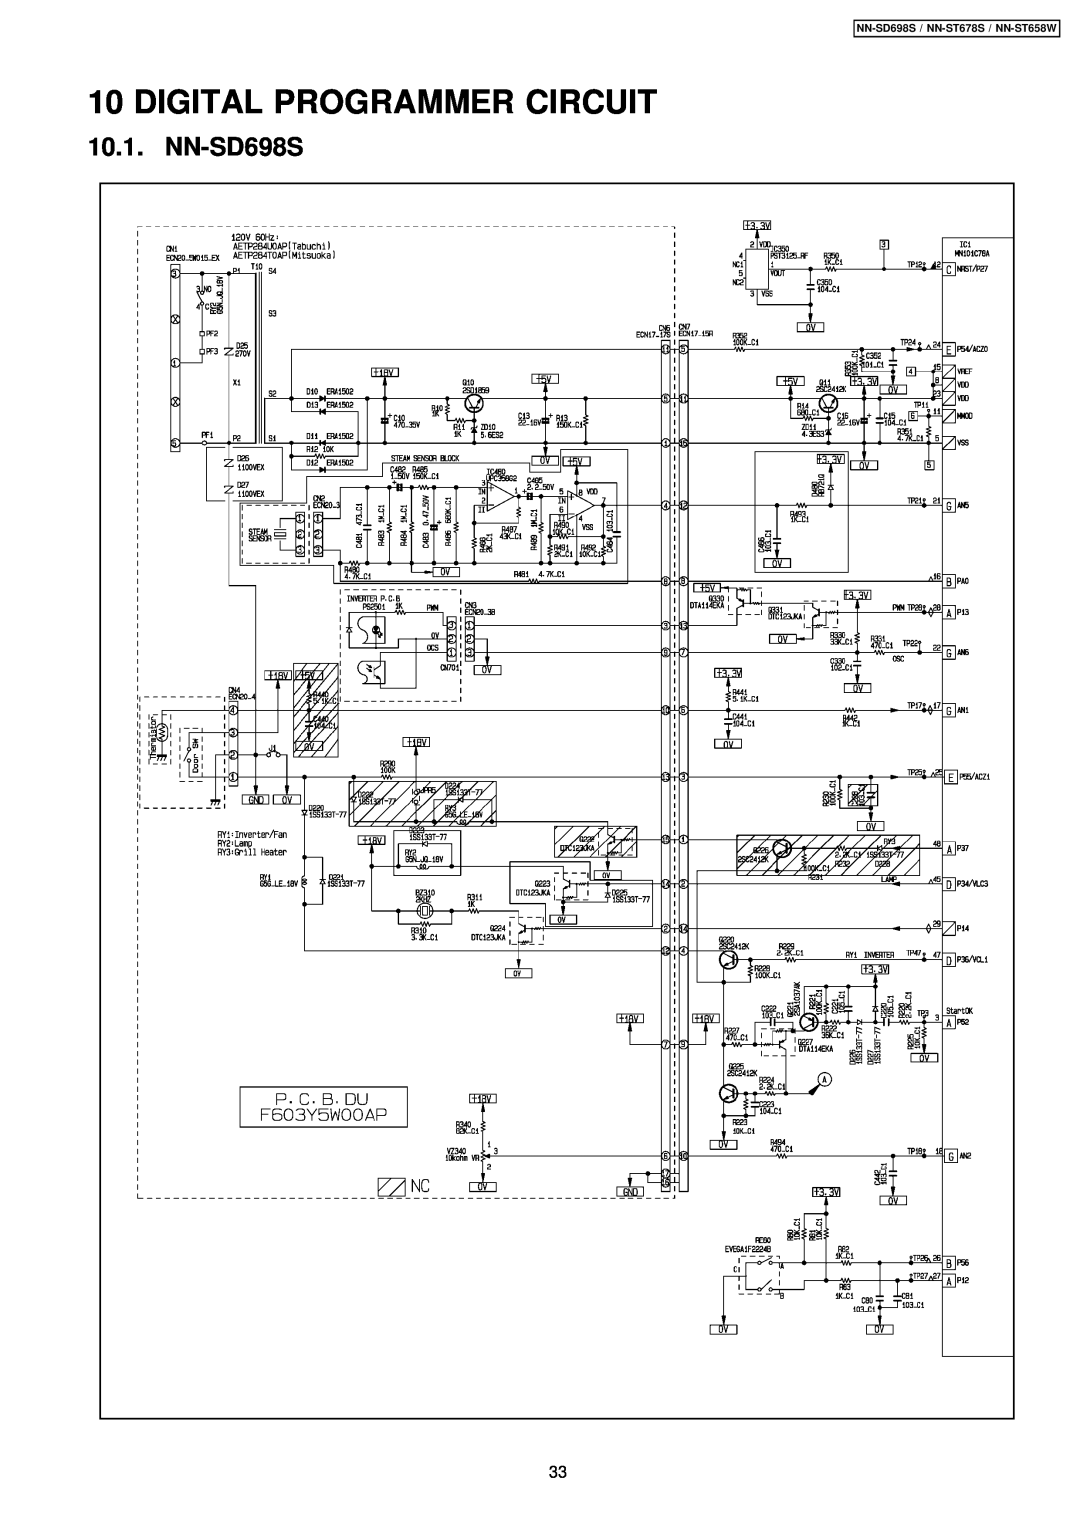 Panasonic manual Digital Programmer Circuit, NN-SD698S / NN-ST678S / NN-ST658W 